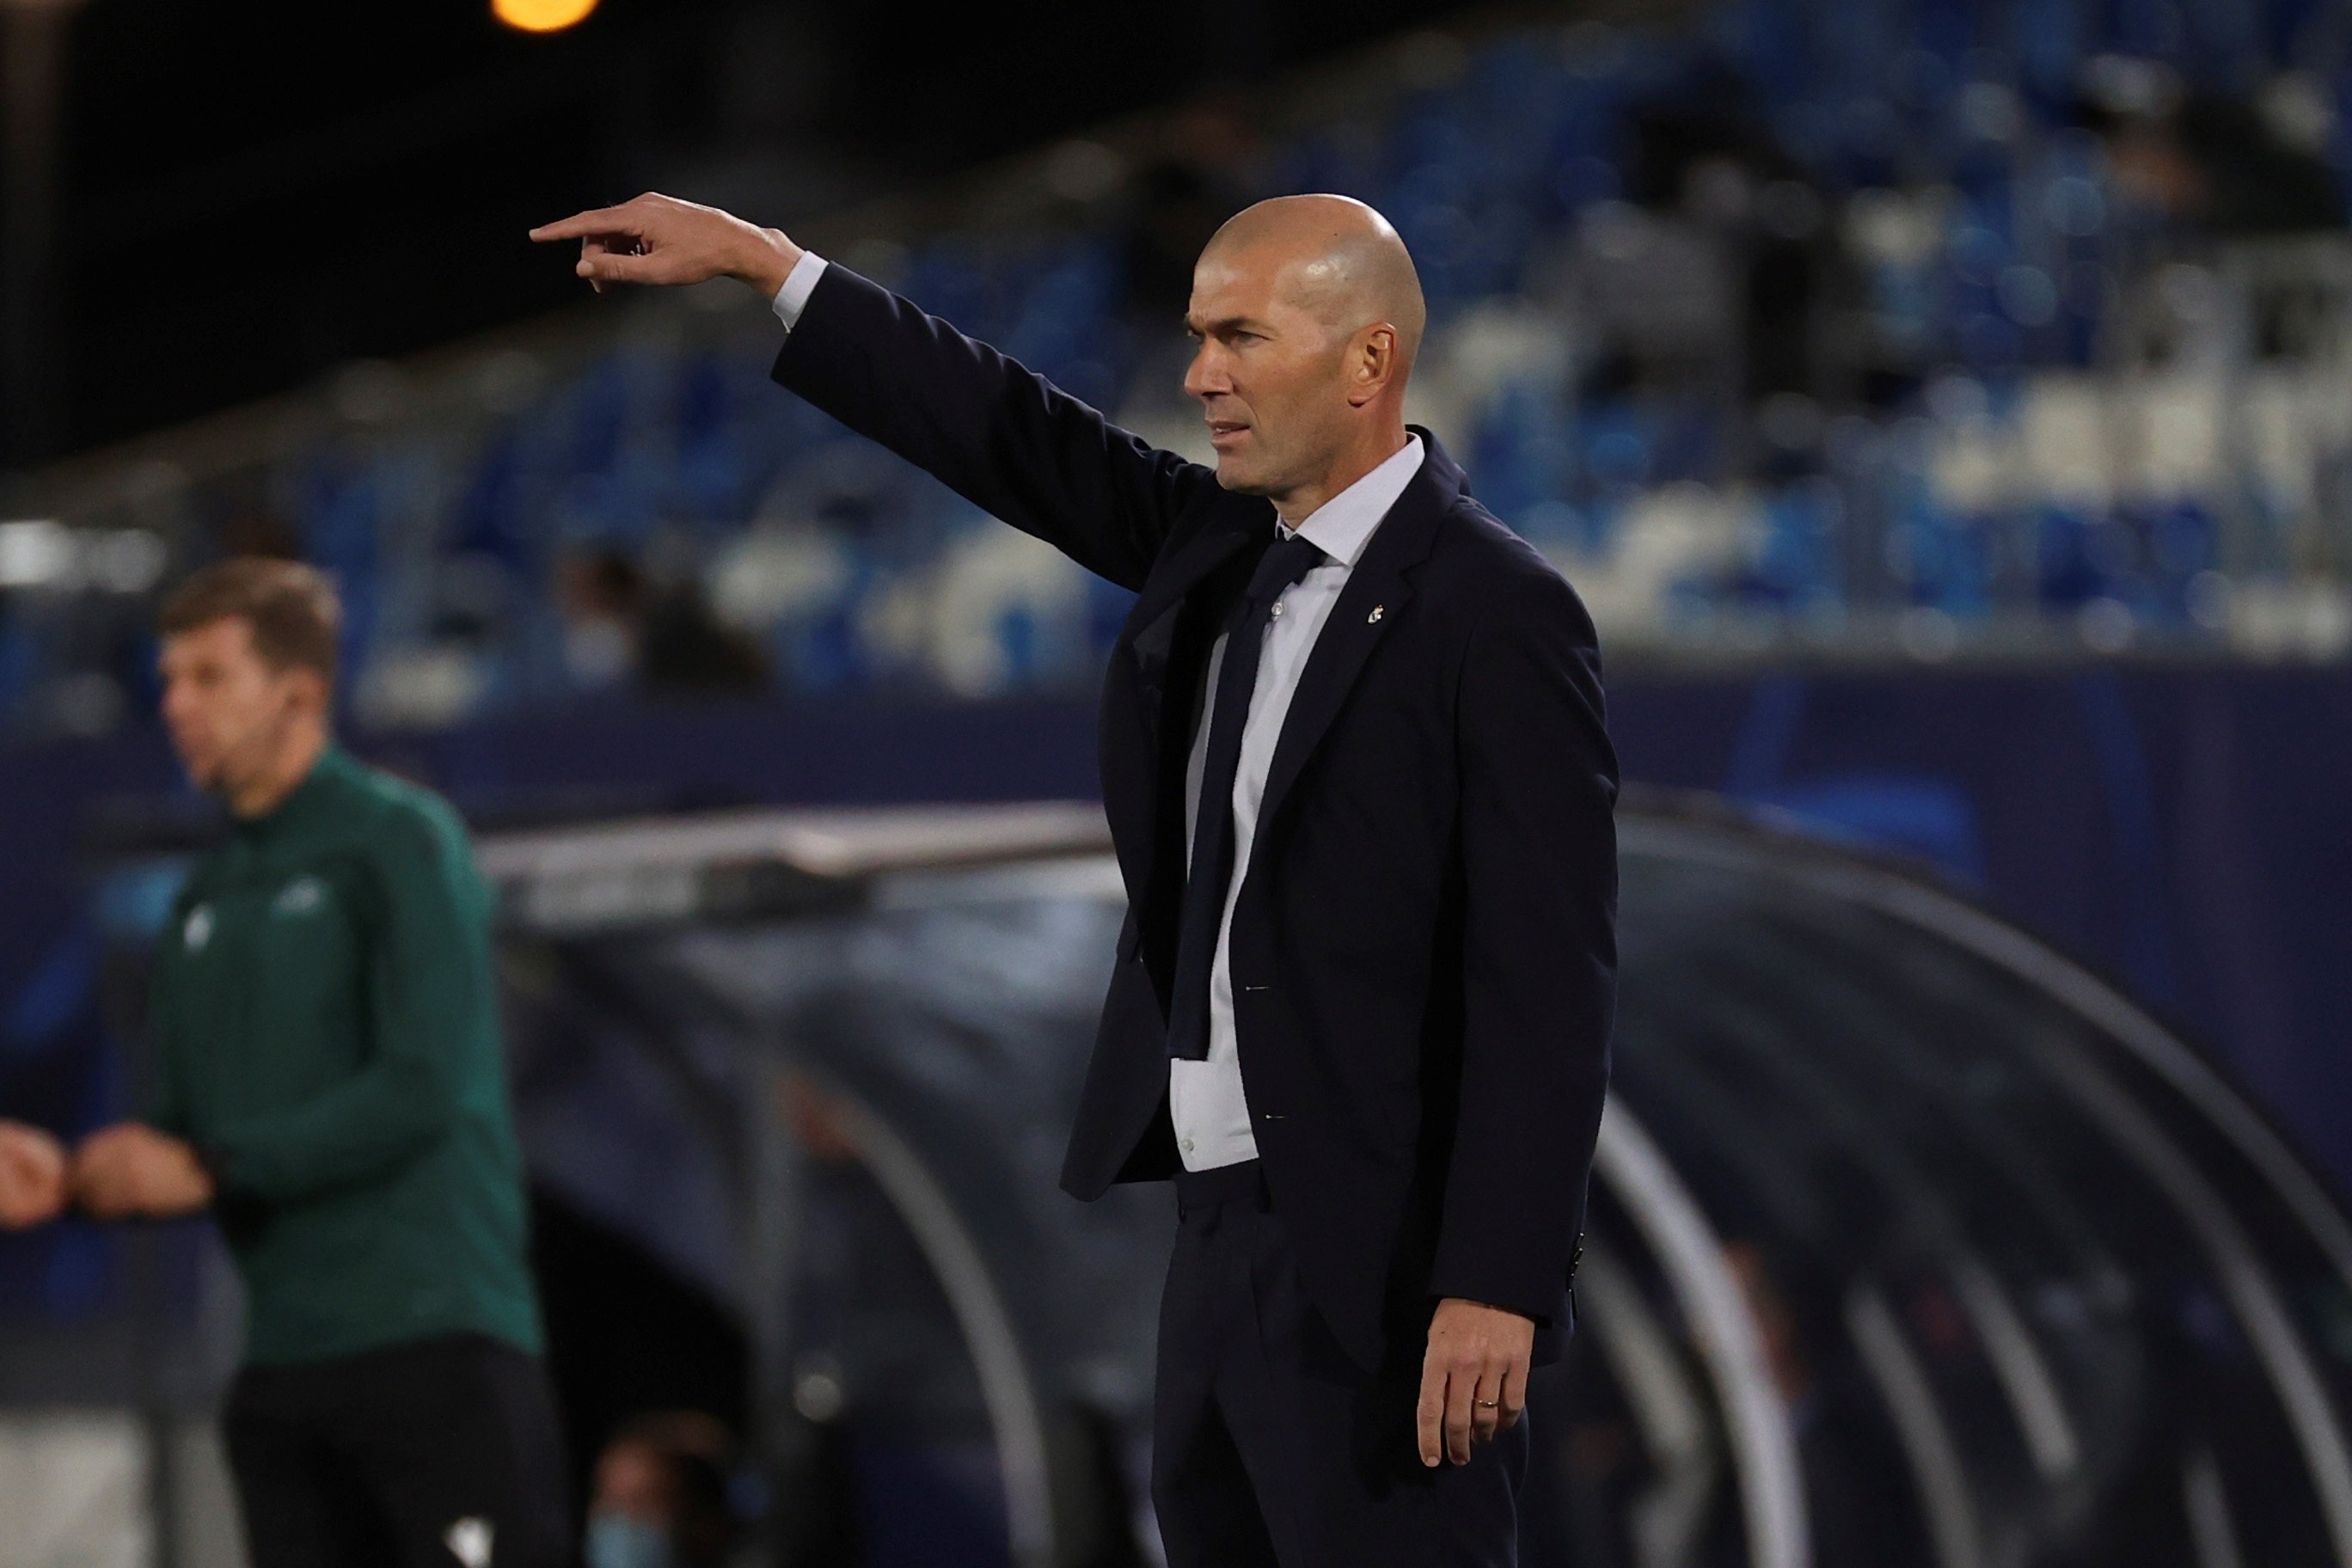 Zidane: "No m'agrada anar de víctima, cal pensar en positiu"